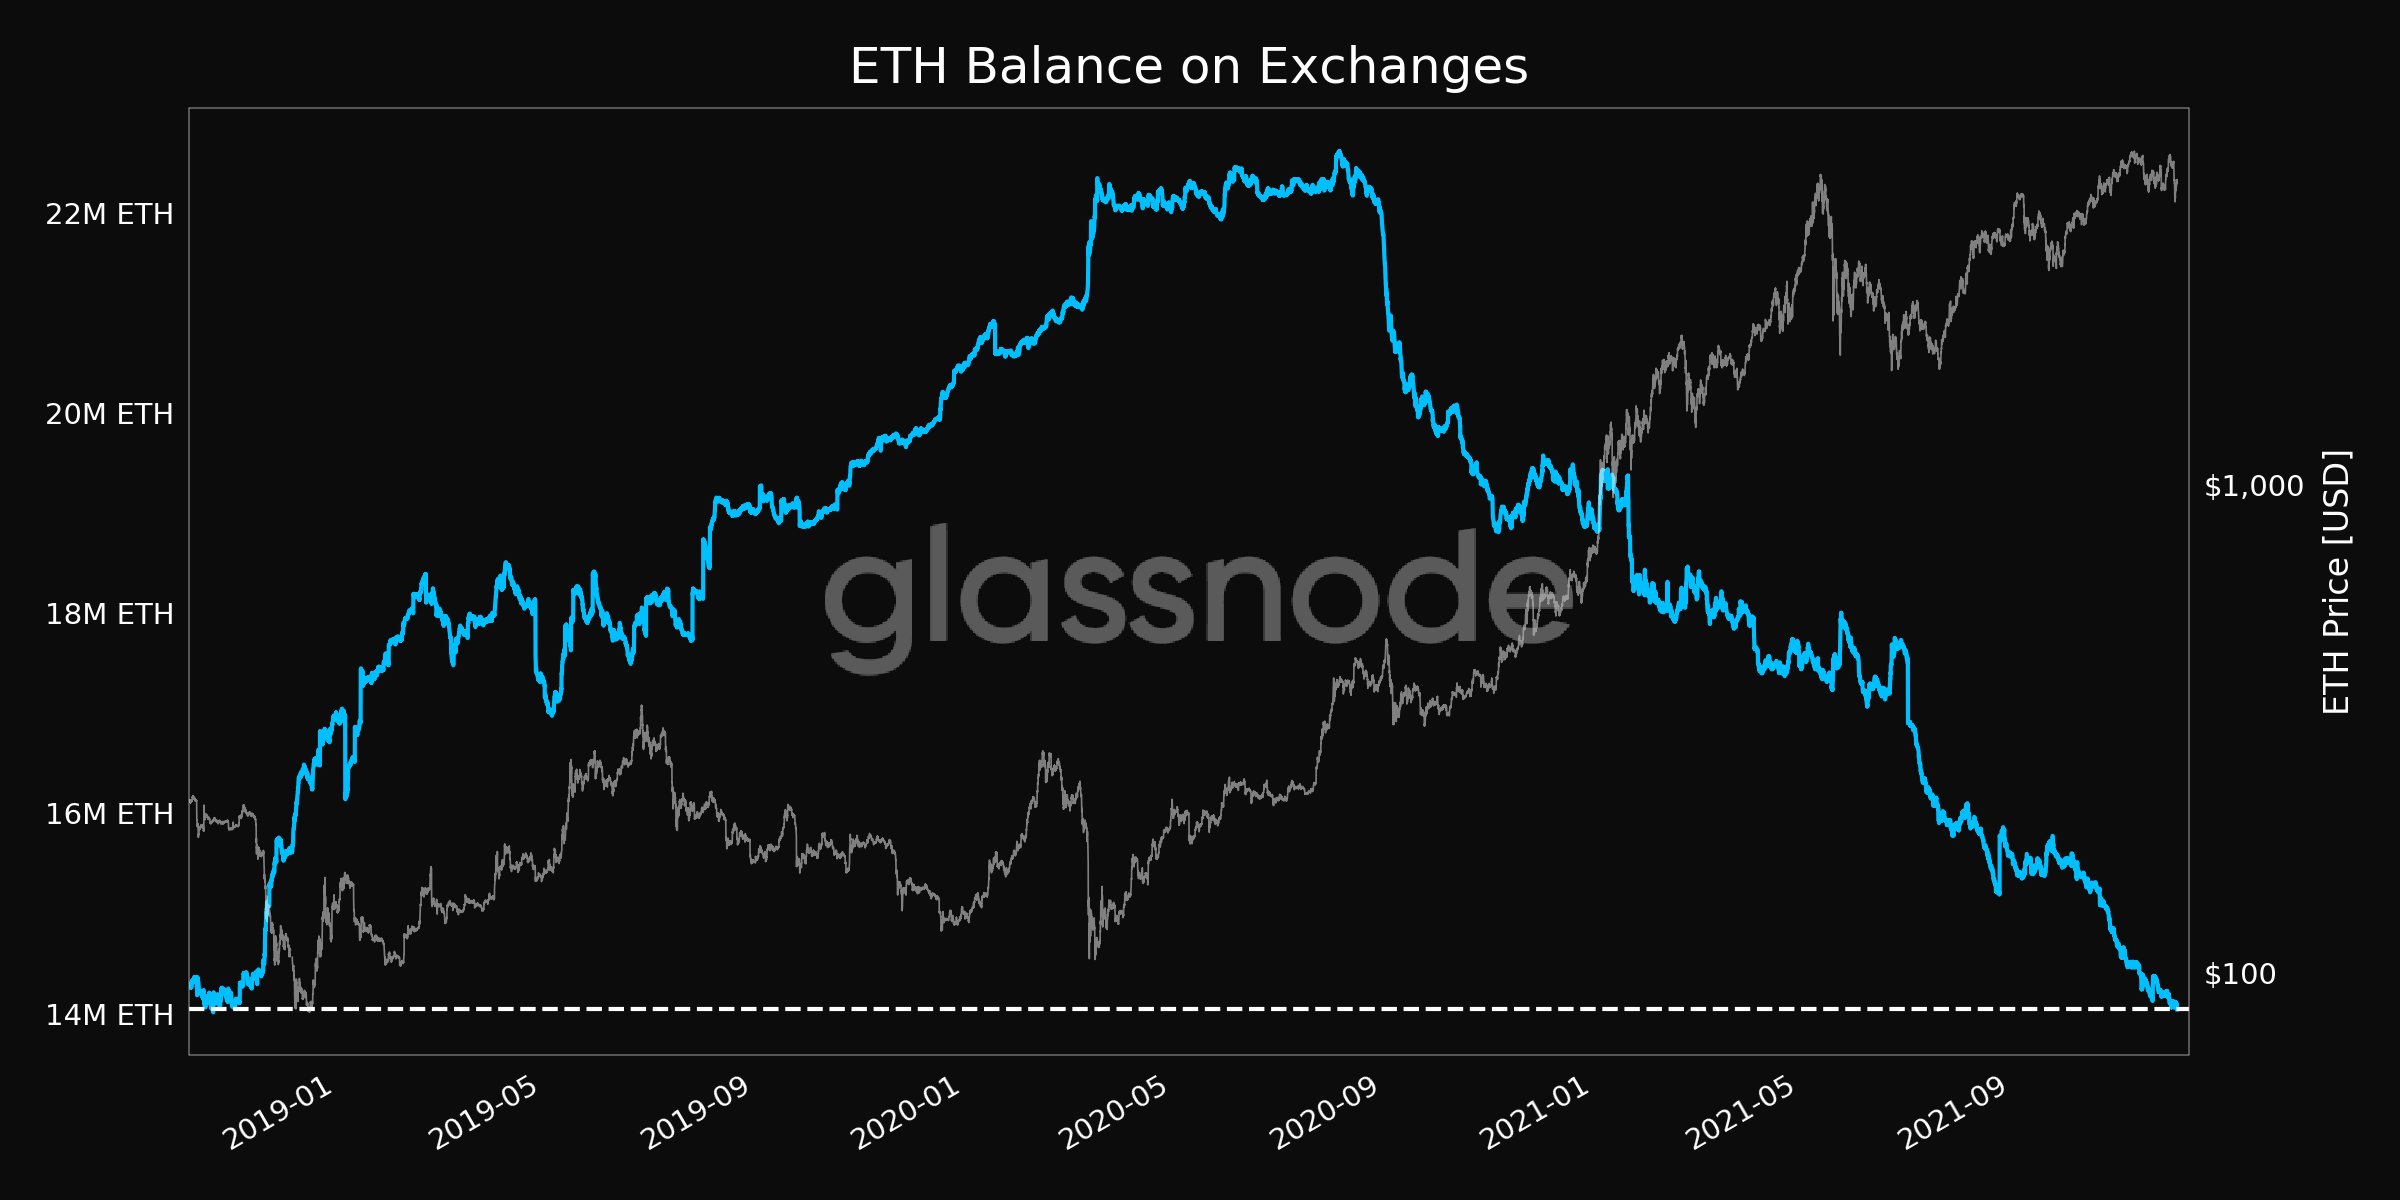  three-year ethereum low fall exchange balances shows 